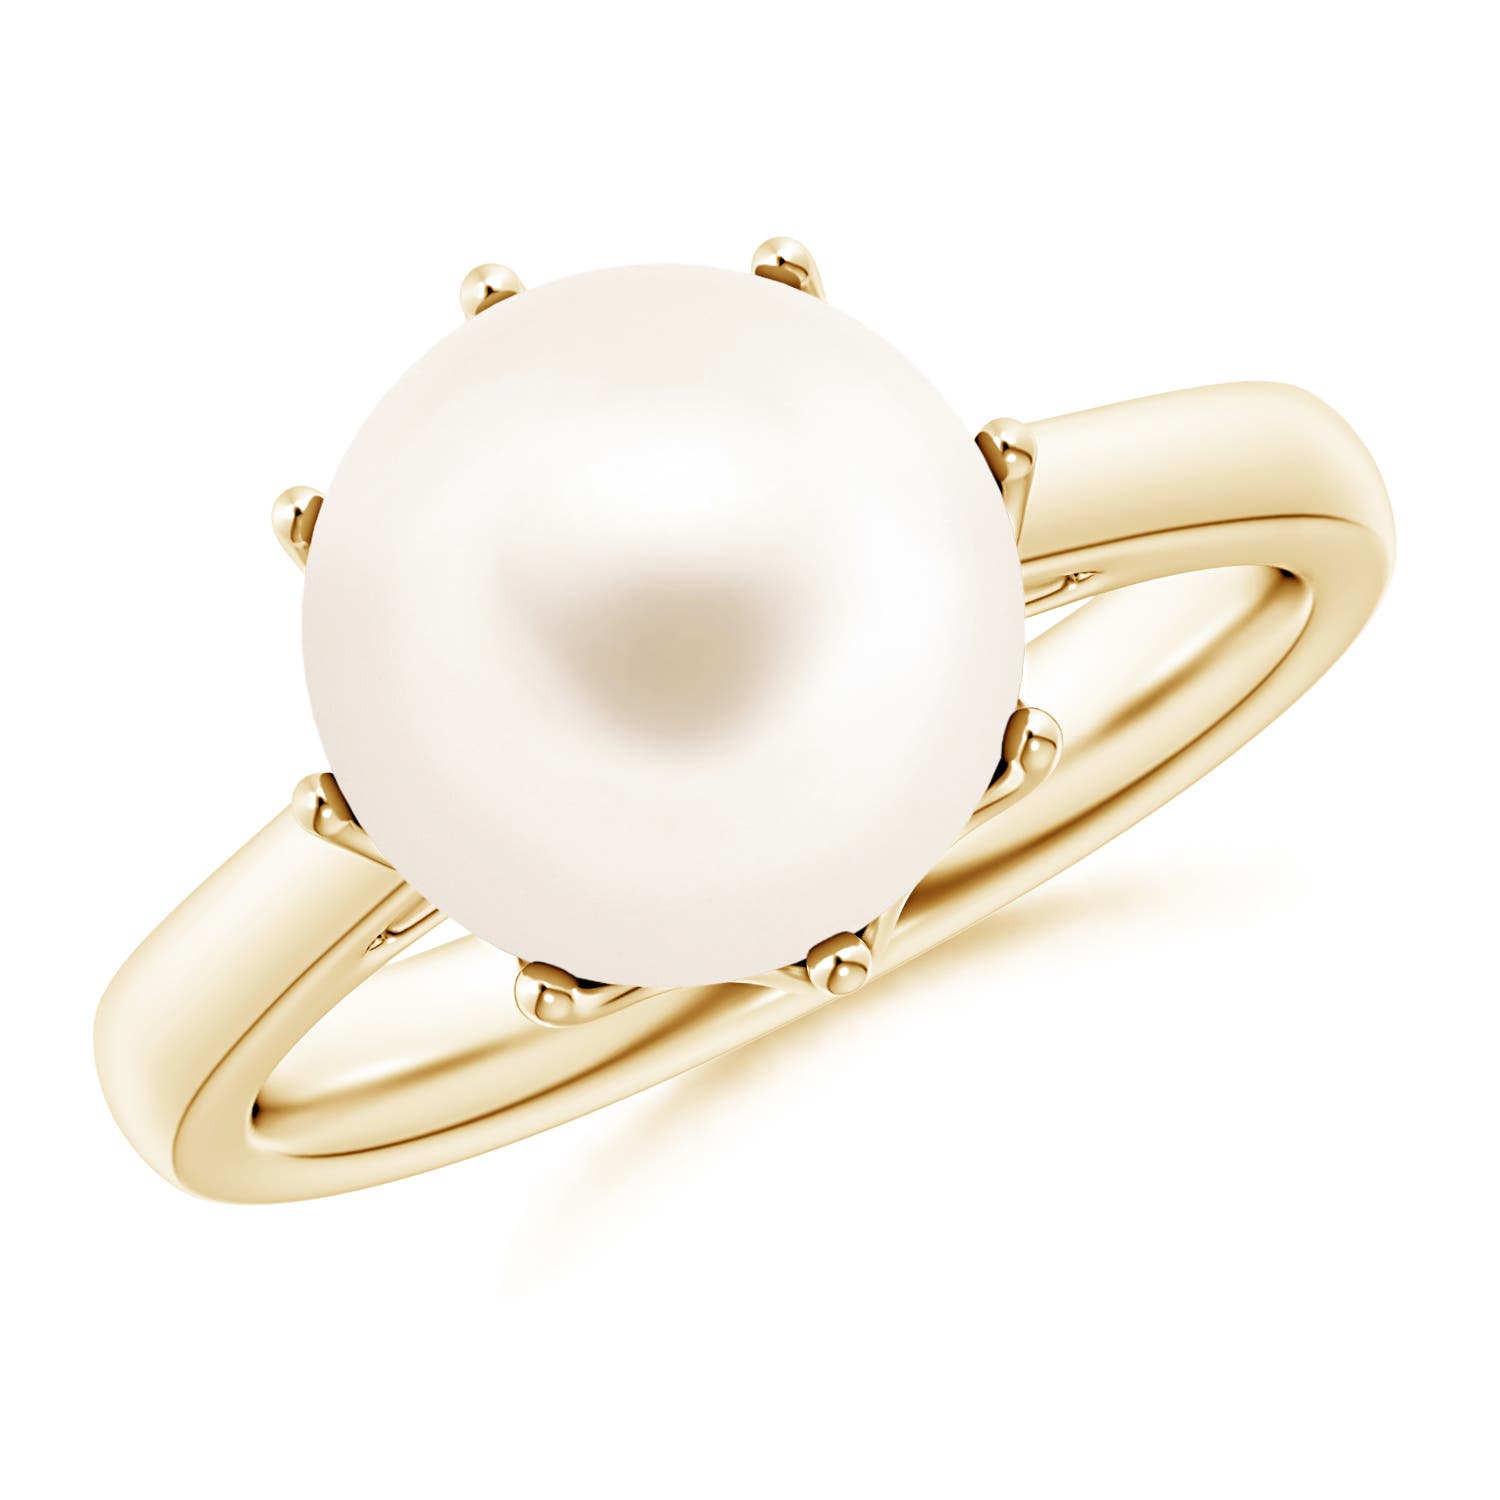 Shop Freshwater Pearl Rings for Women | Angara